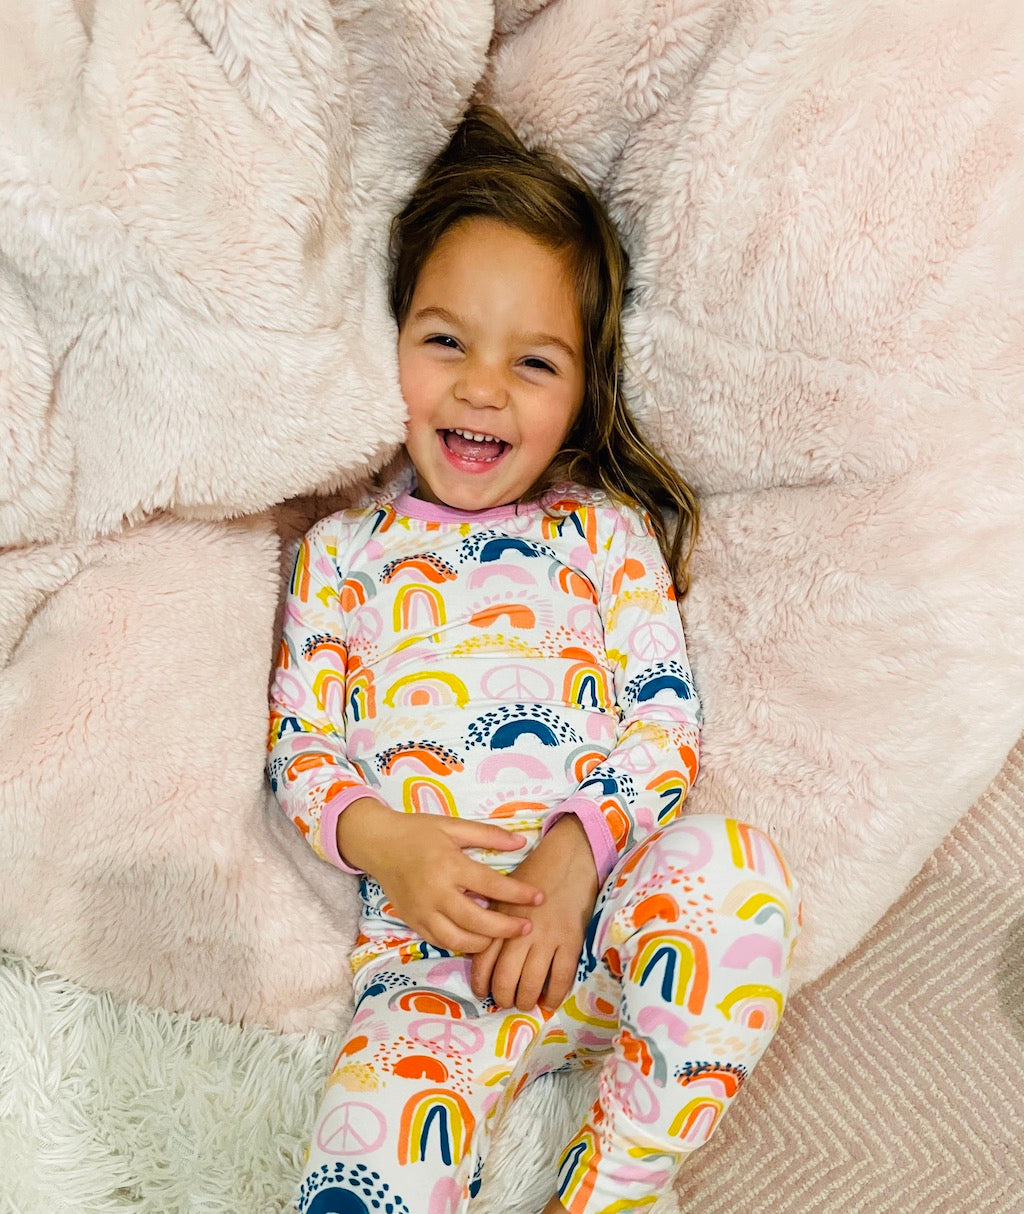 Clover Baby Rainbow Pajamas in Pink